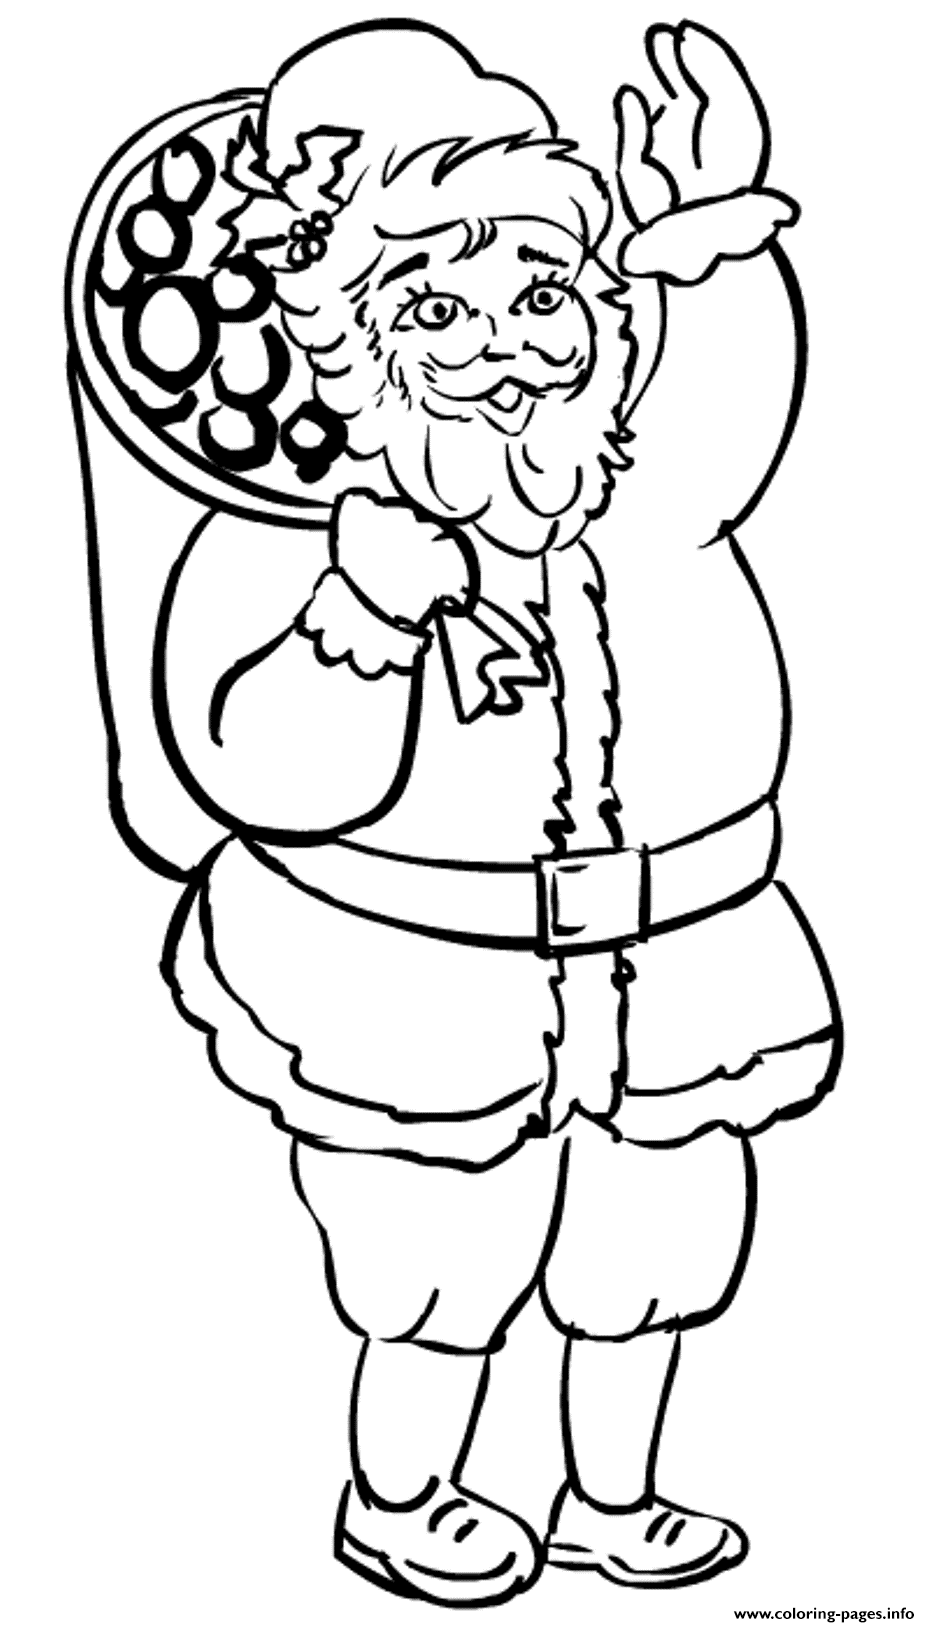 Santa Christmas S For Kids6853 coloring